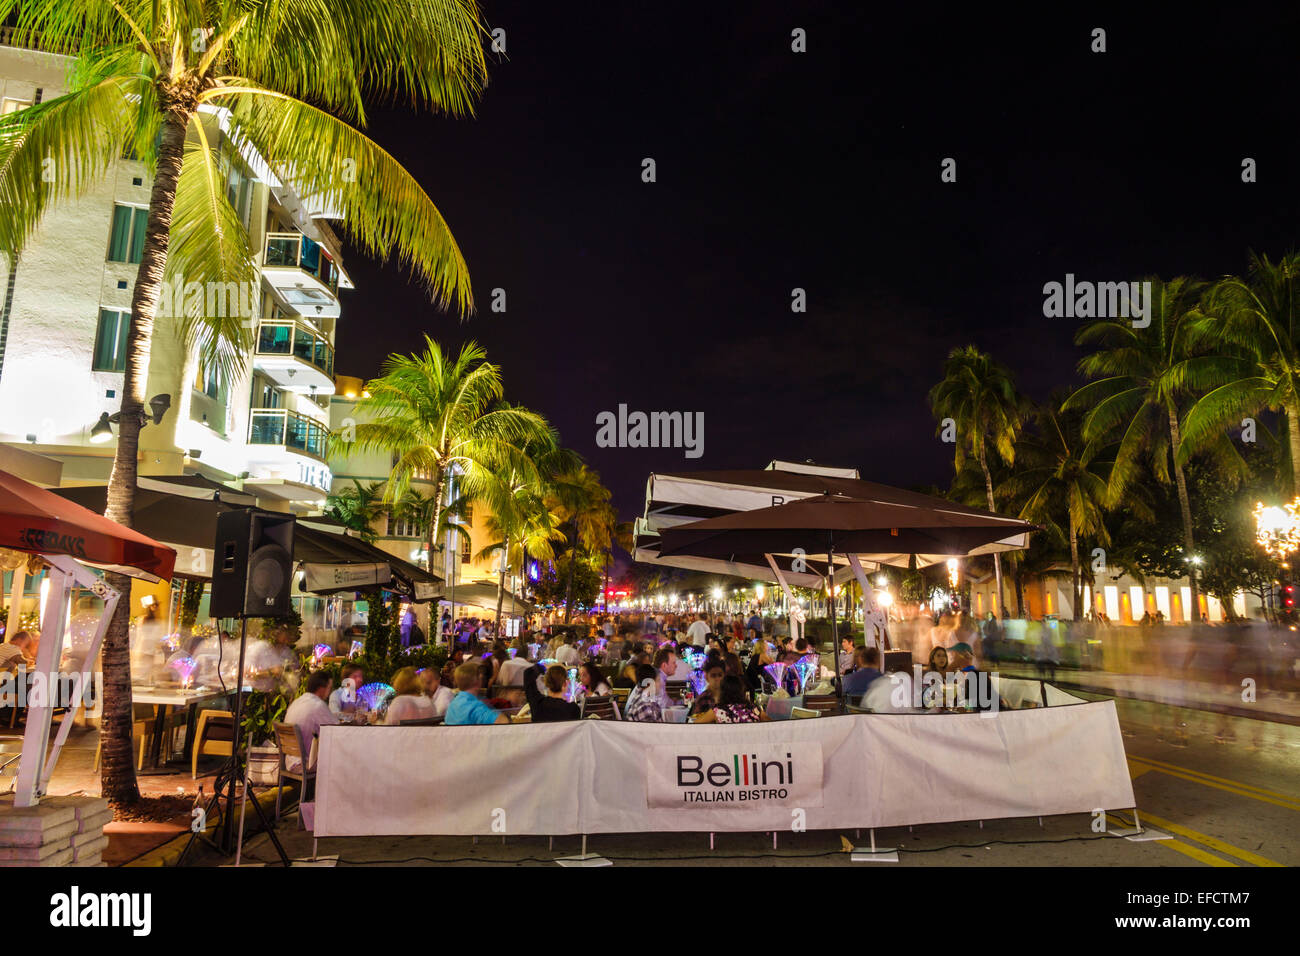 Miami Beach Florida,Ocean Drive,New Year's Eve,Bellini Italian Bistro,restaurant restaurants food dining eating out cafe cafes bistro,al fresco sidewa Stock Photo